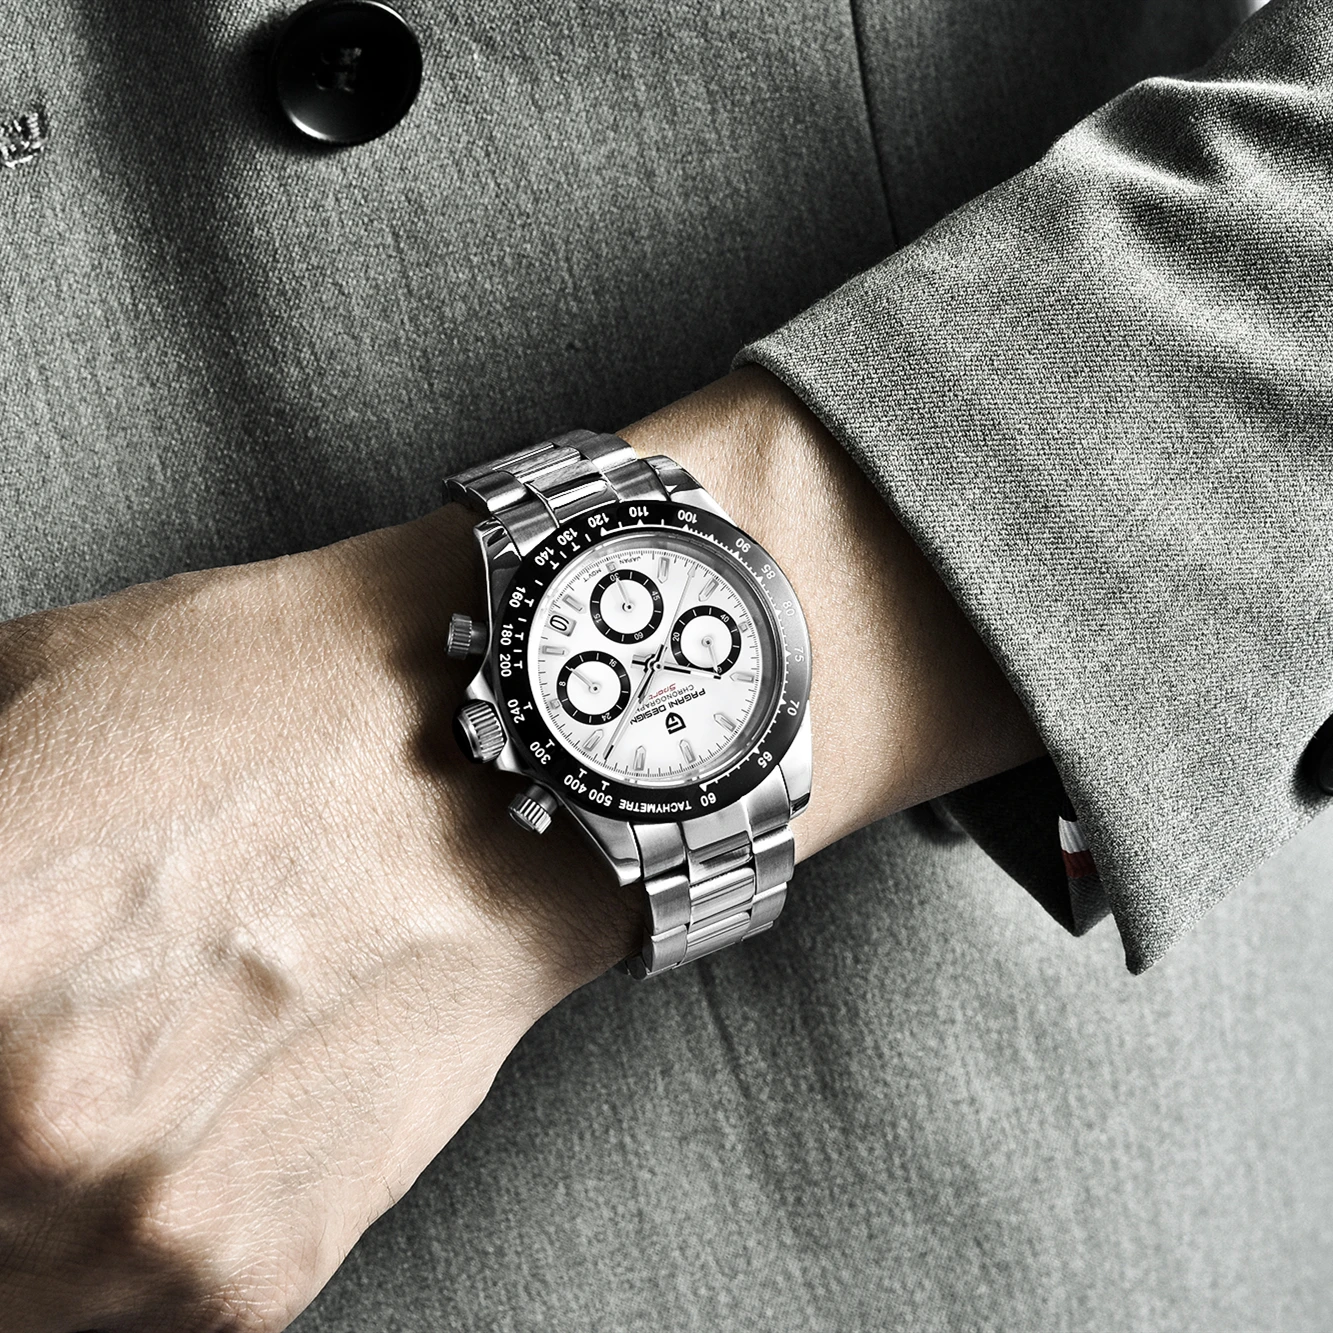 PAGANI Мужские кварцевые наручные часы мужские Seiko для бега часы хронограф водонепроницаемые часы мужские спортивные часы Relogio Masculino